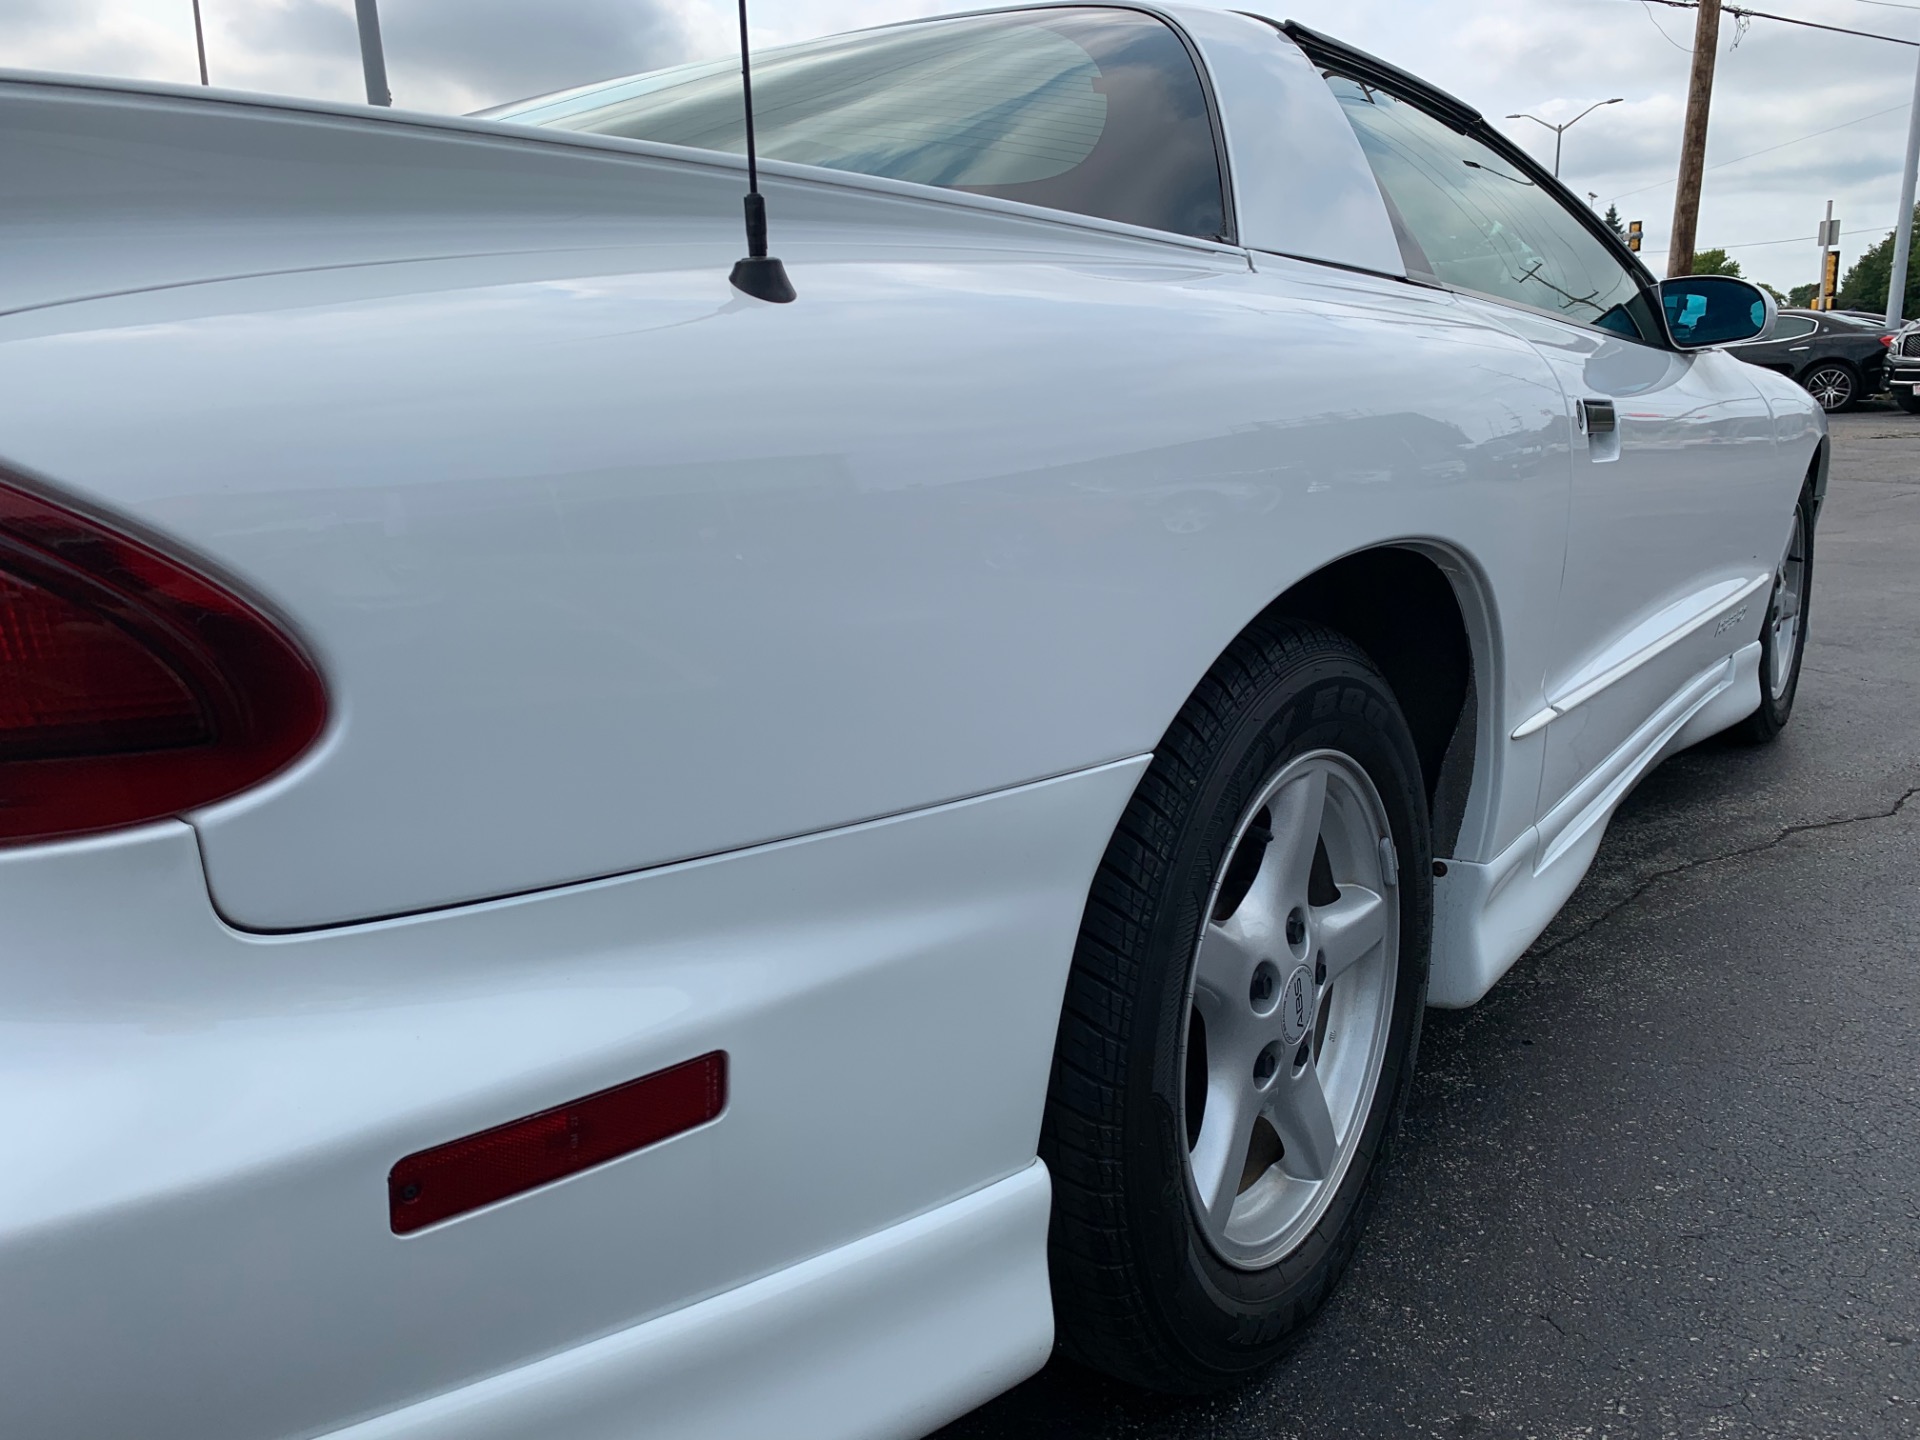 Used-1997-Pontiac-Firebird